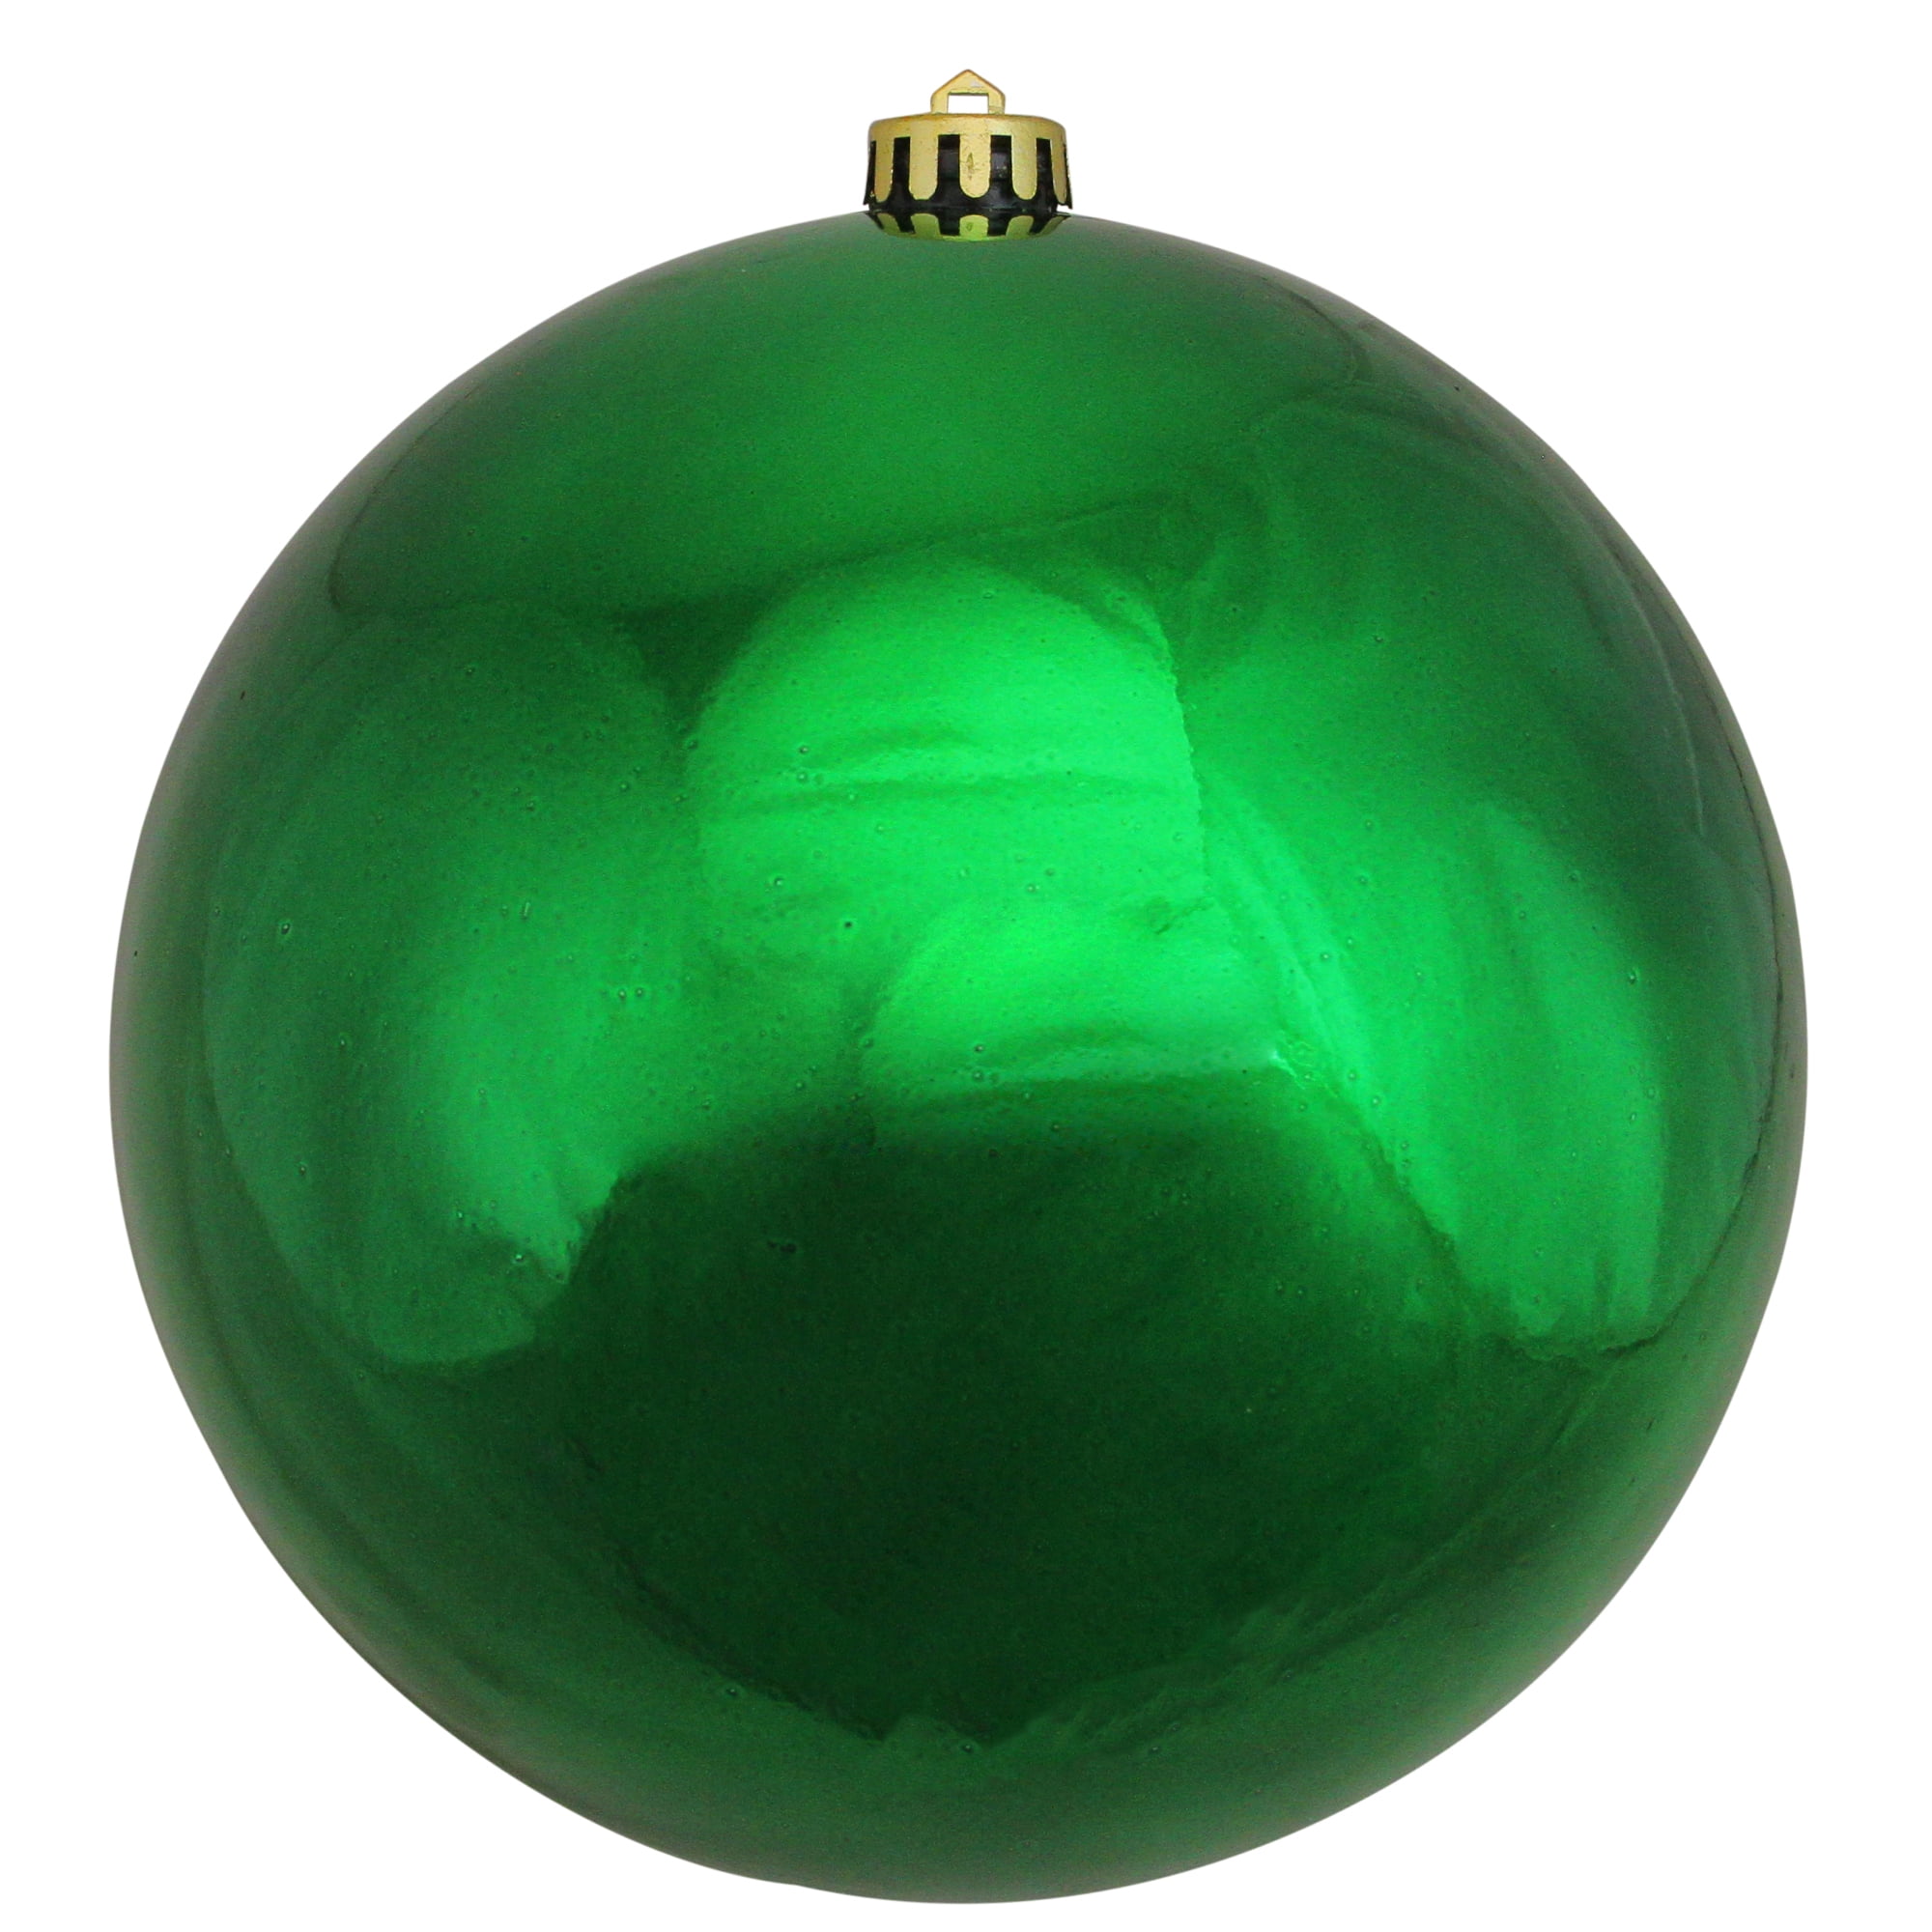 Northlight 8" Shatterproof Shiny Sized Christmas Ball Ornament - Green